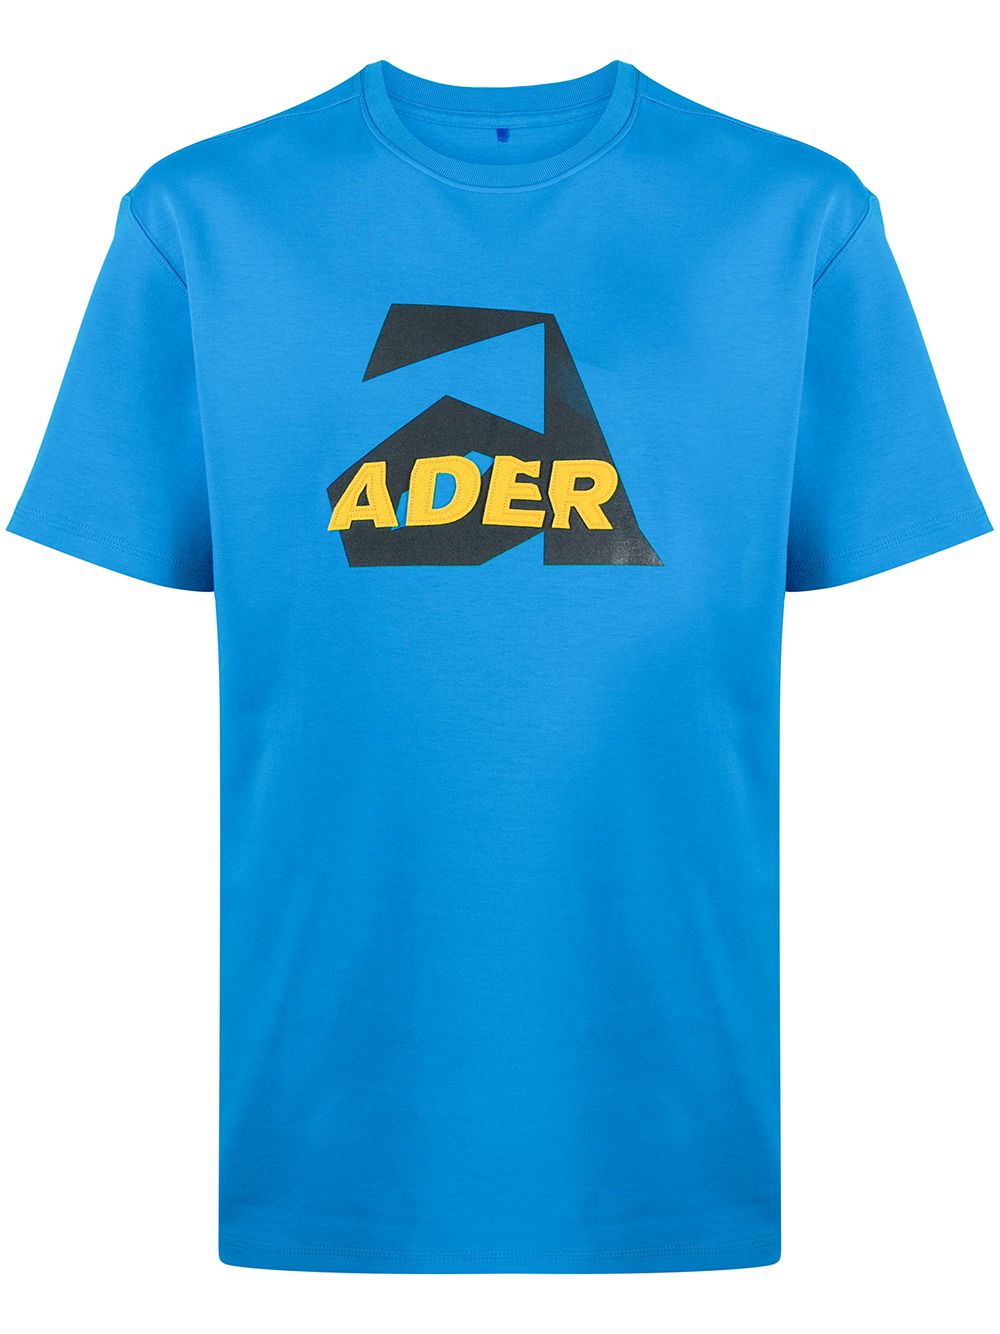 фото Ader error футболка с логотипом